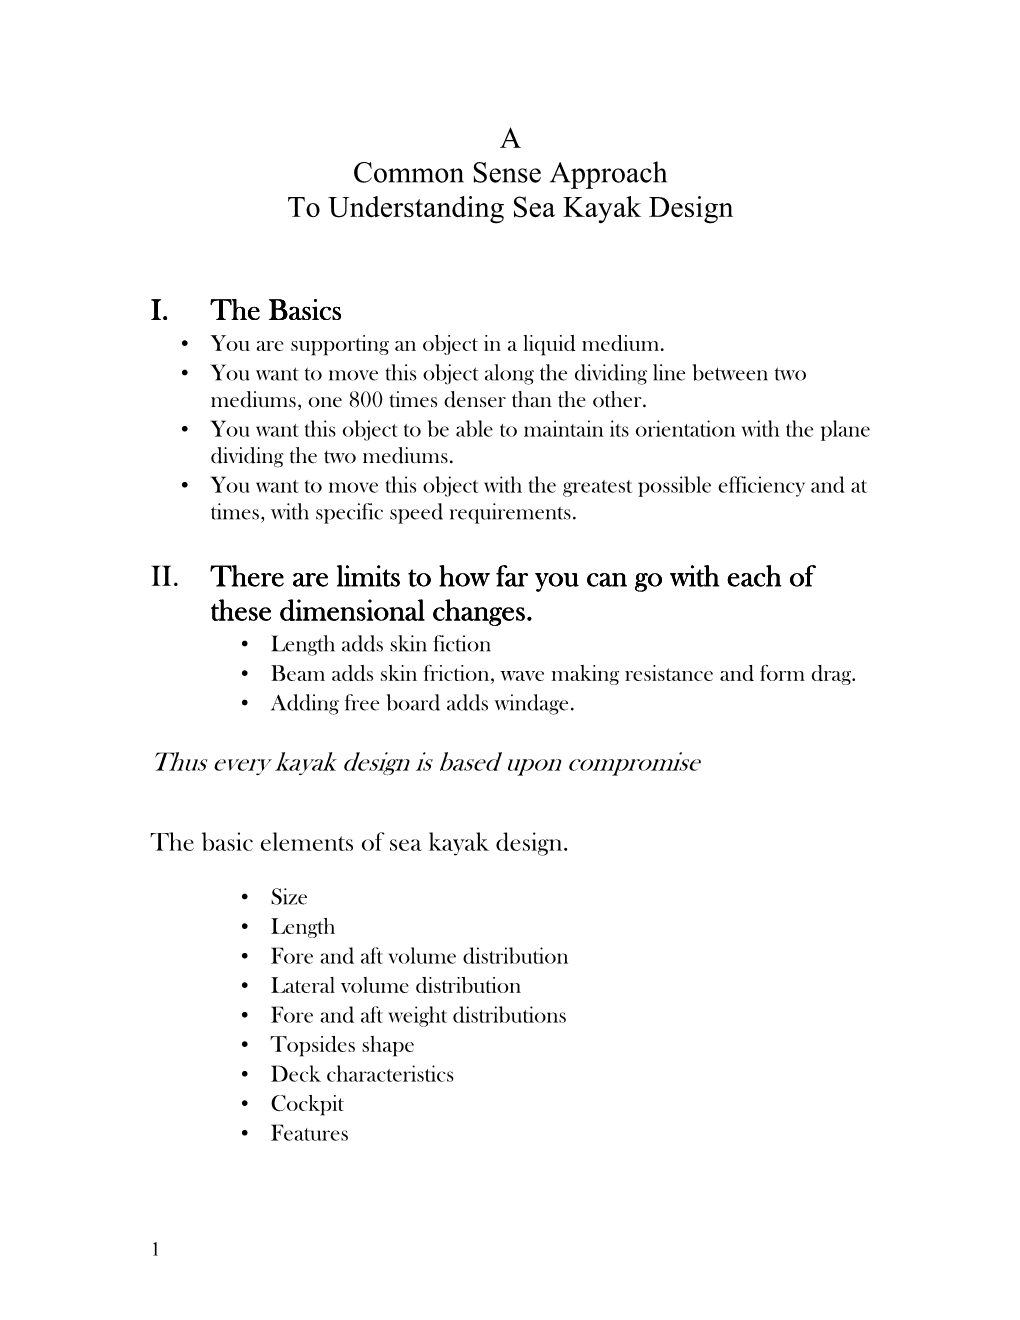 A Common Sense Approach to Understanding Sea Kayak Design I